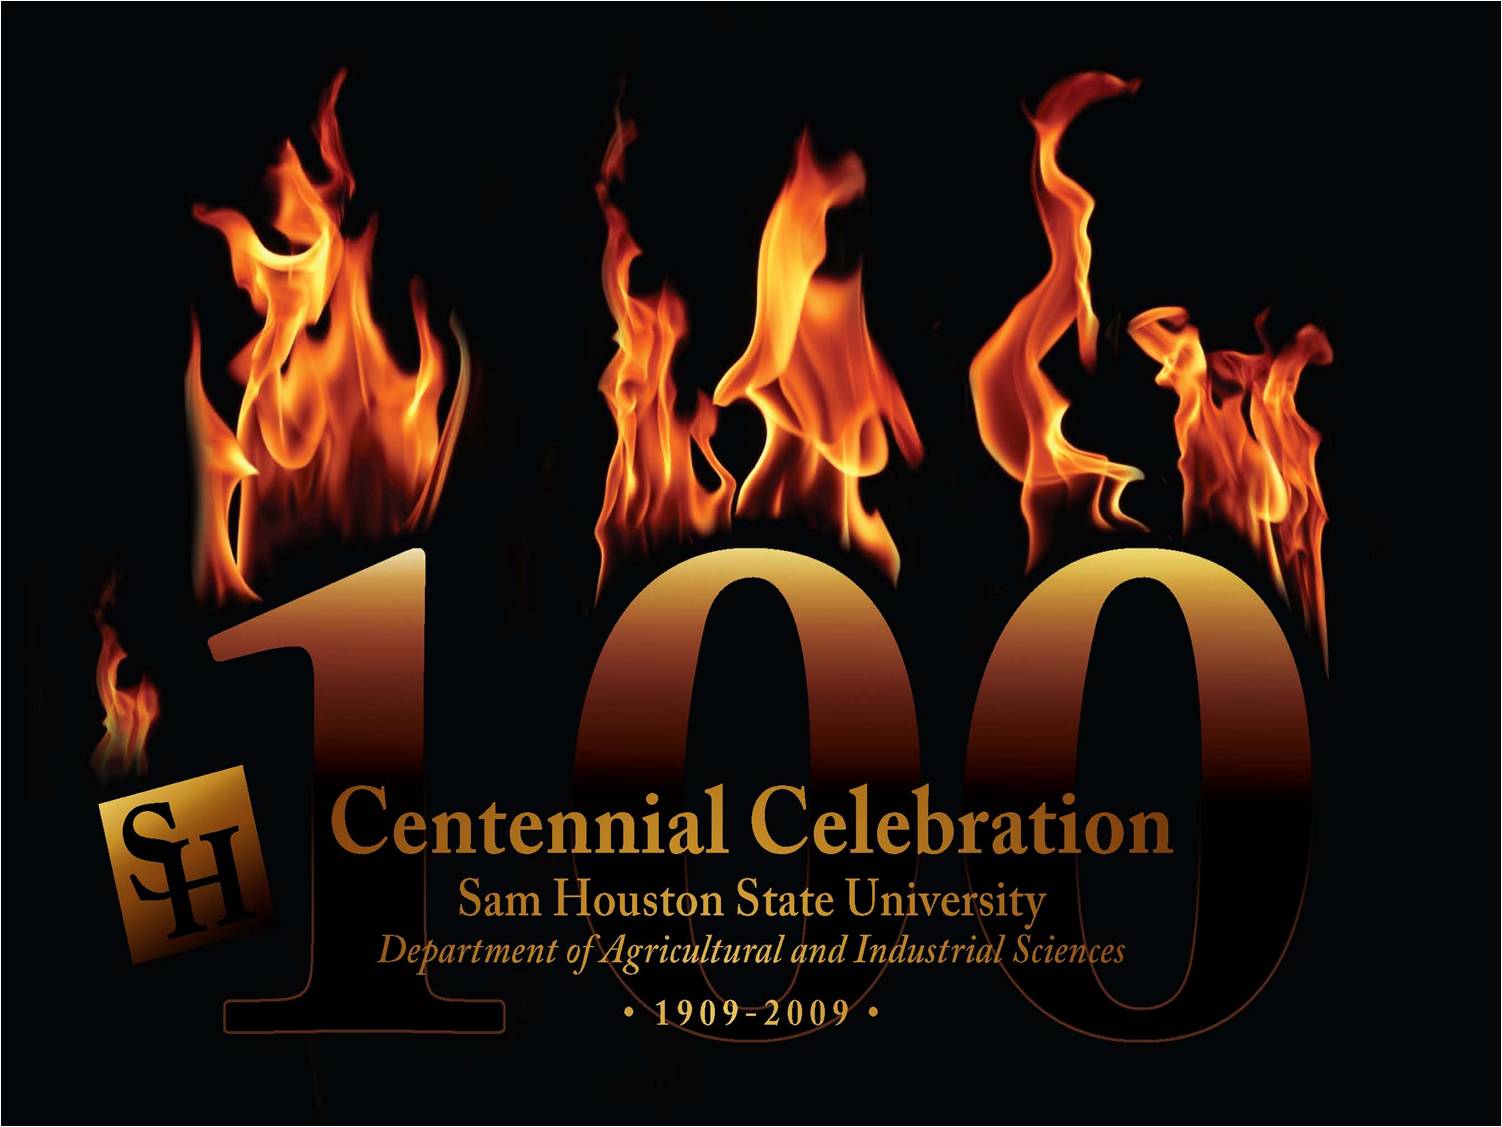 Centennial Celebration poster